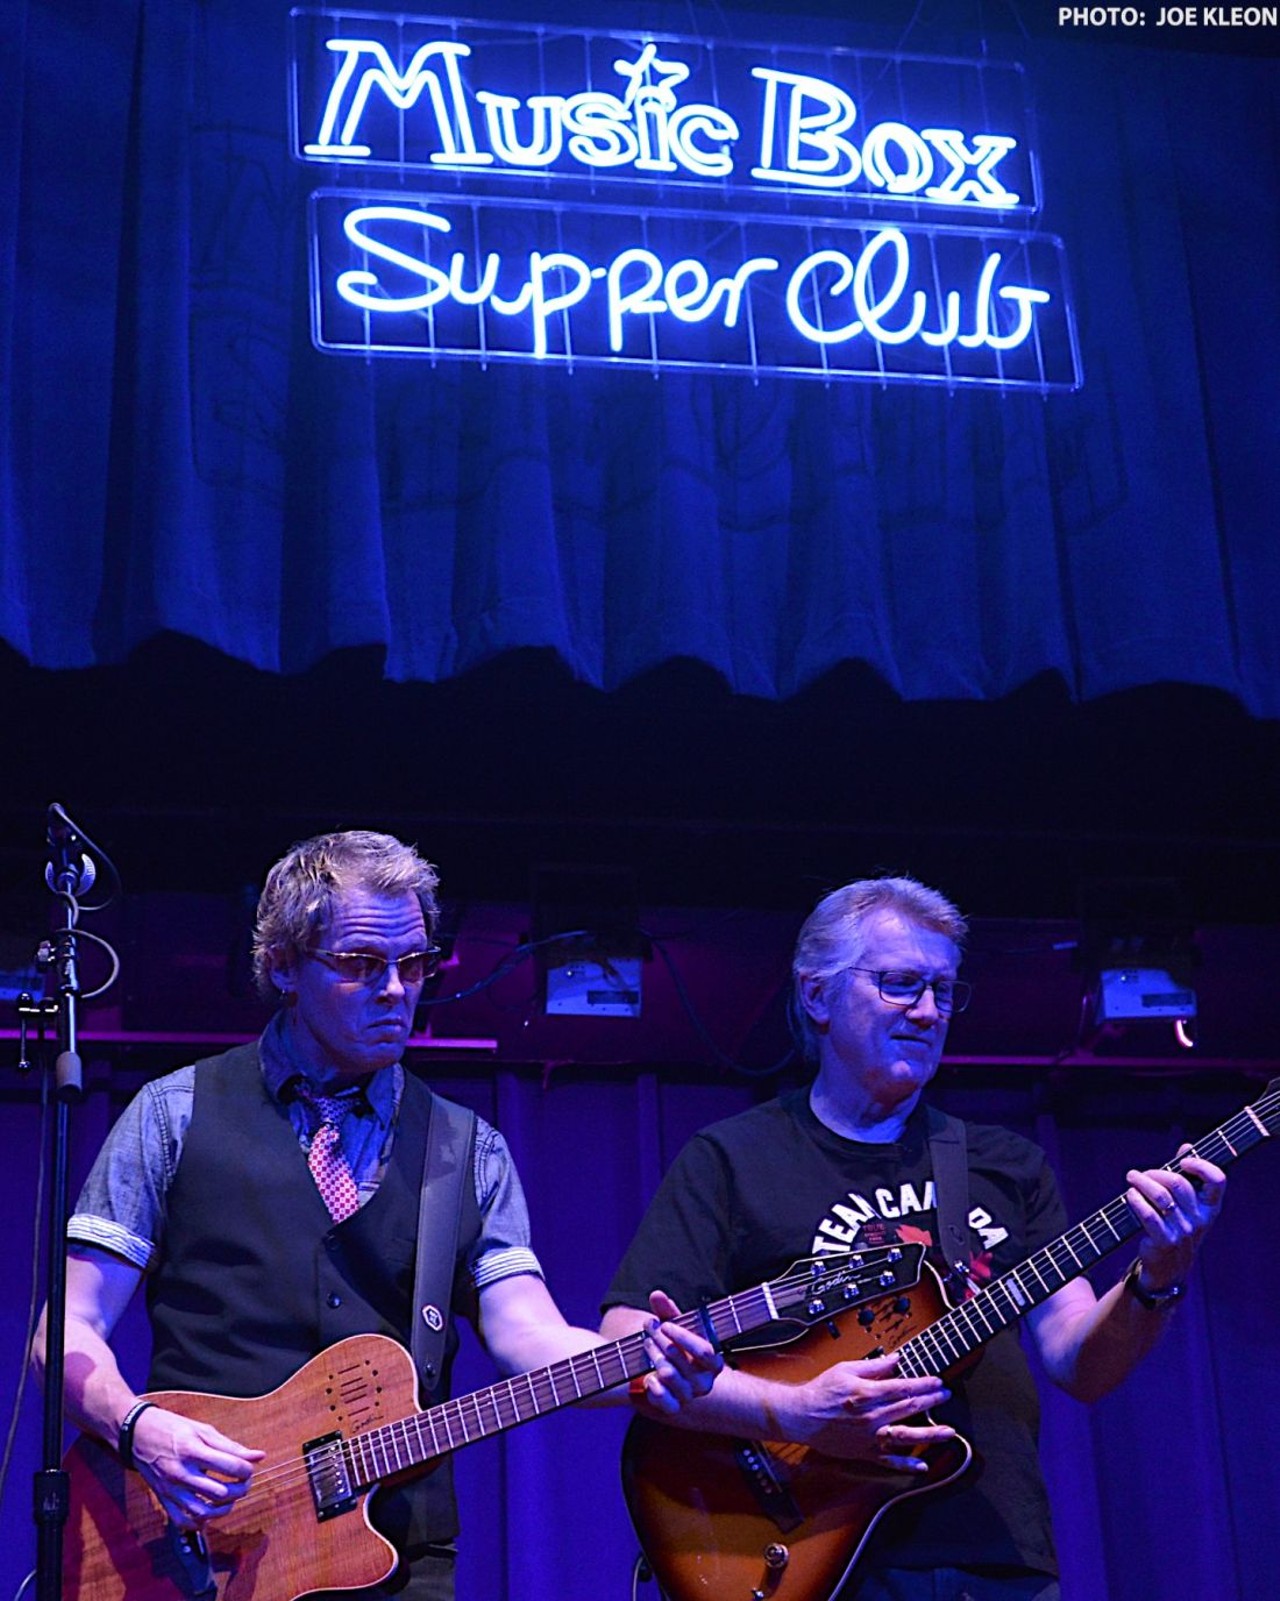 Rik Emmett Performing at Music Box Supper Club